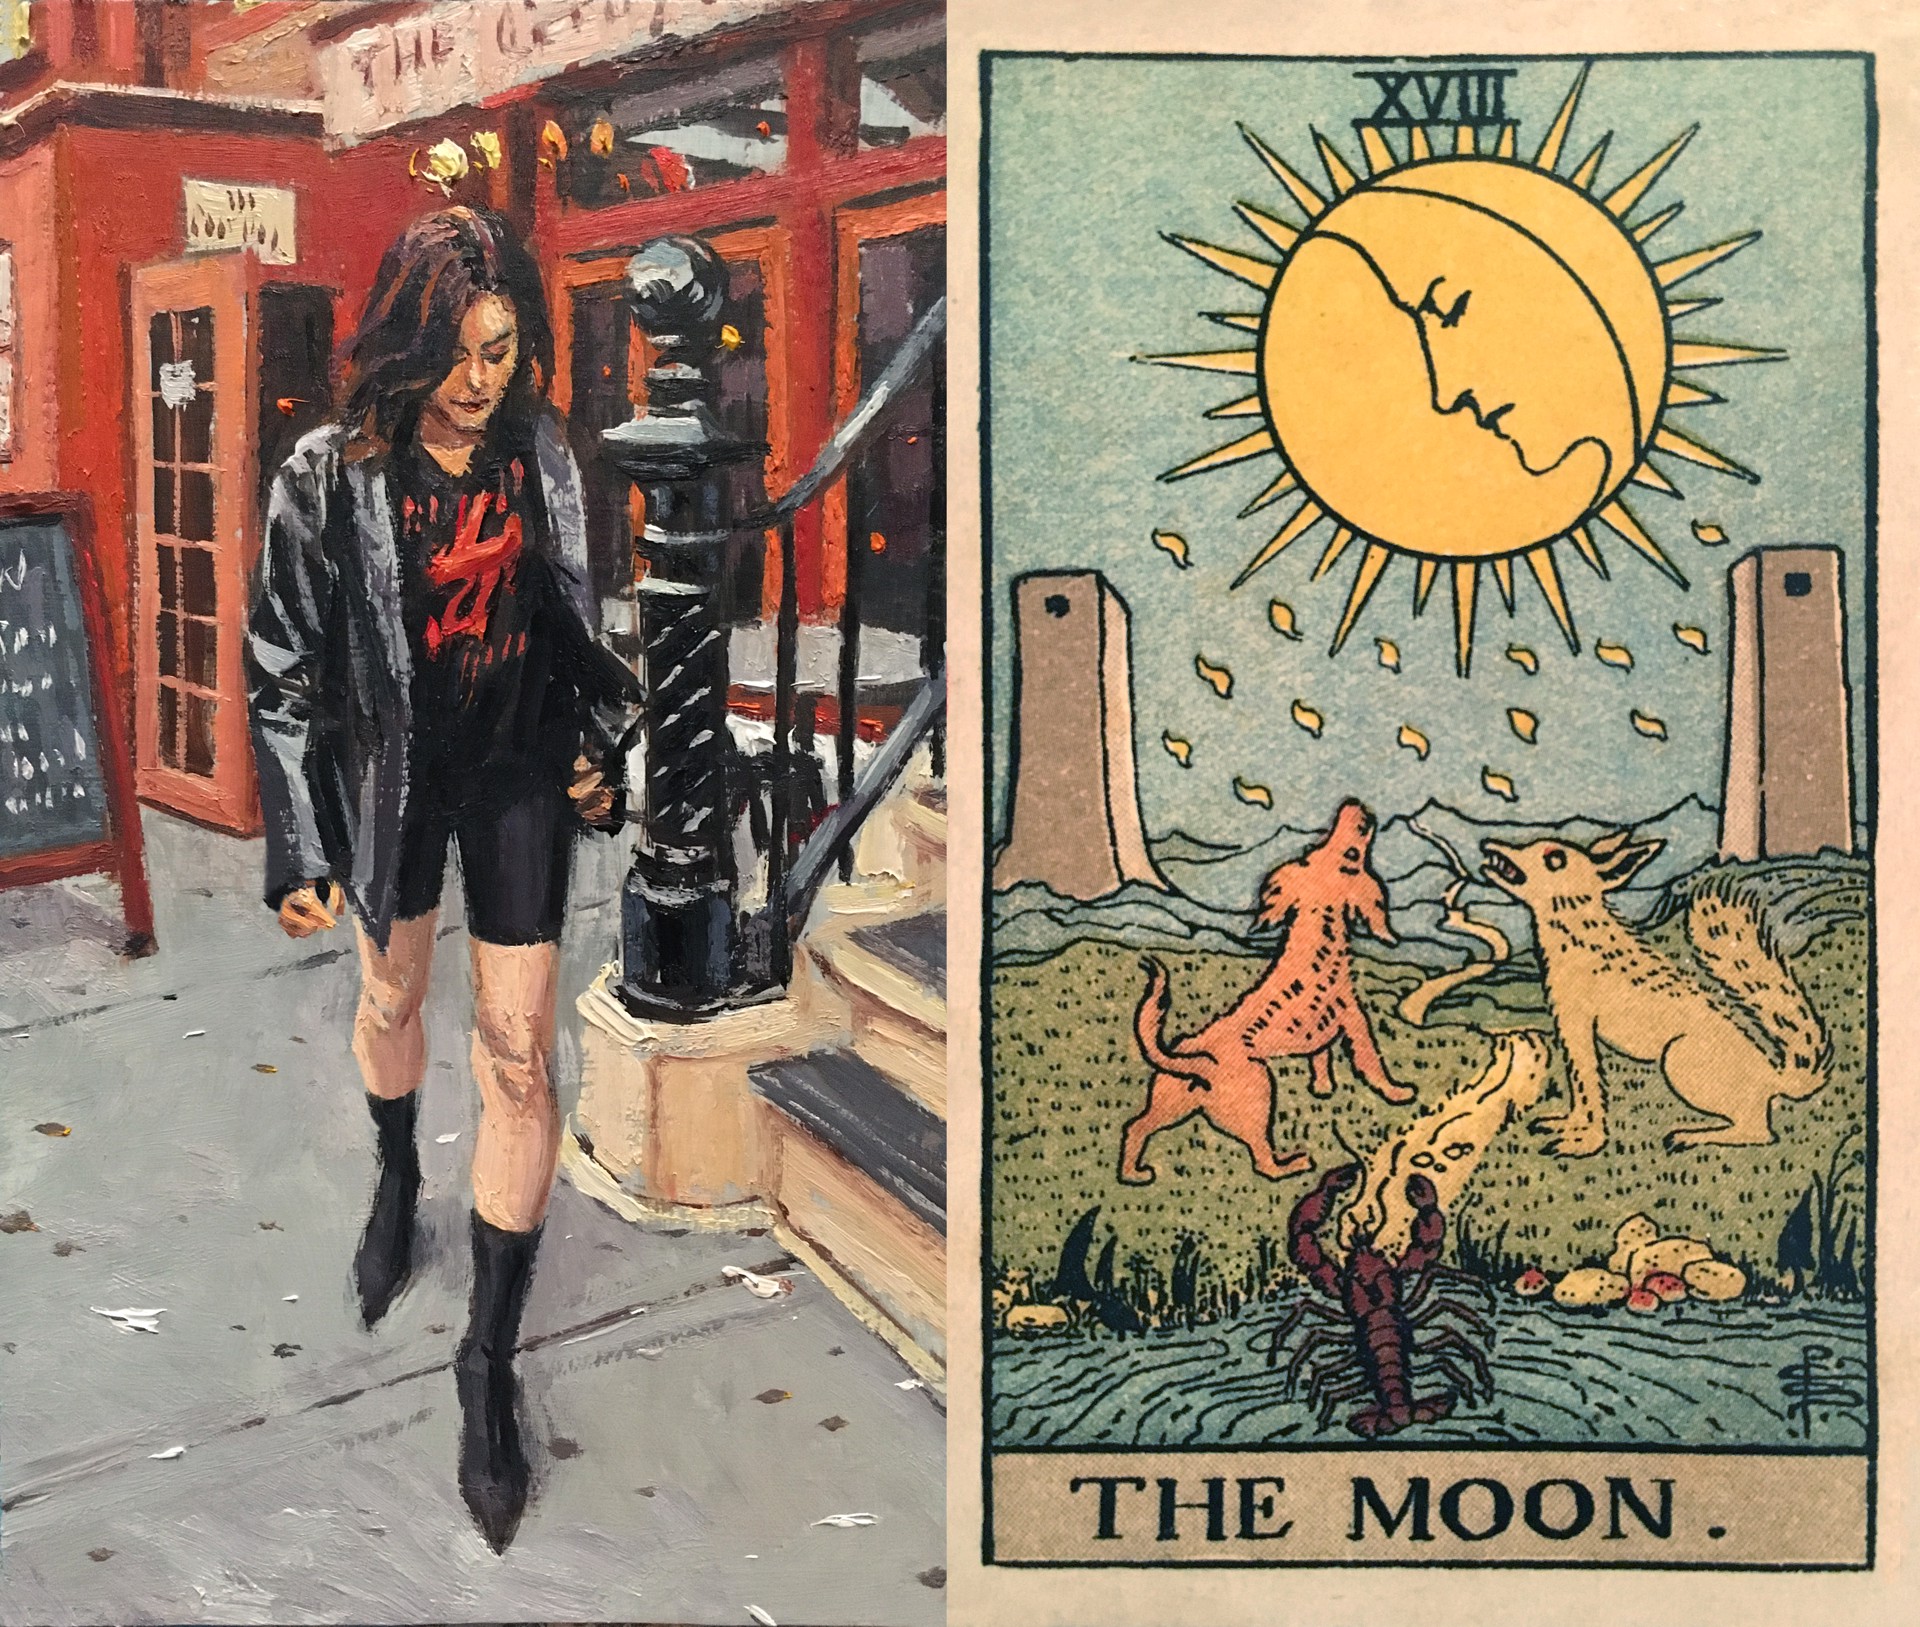 Tarot Card: Amanda Steele & The Moon by Vincent Giarrano